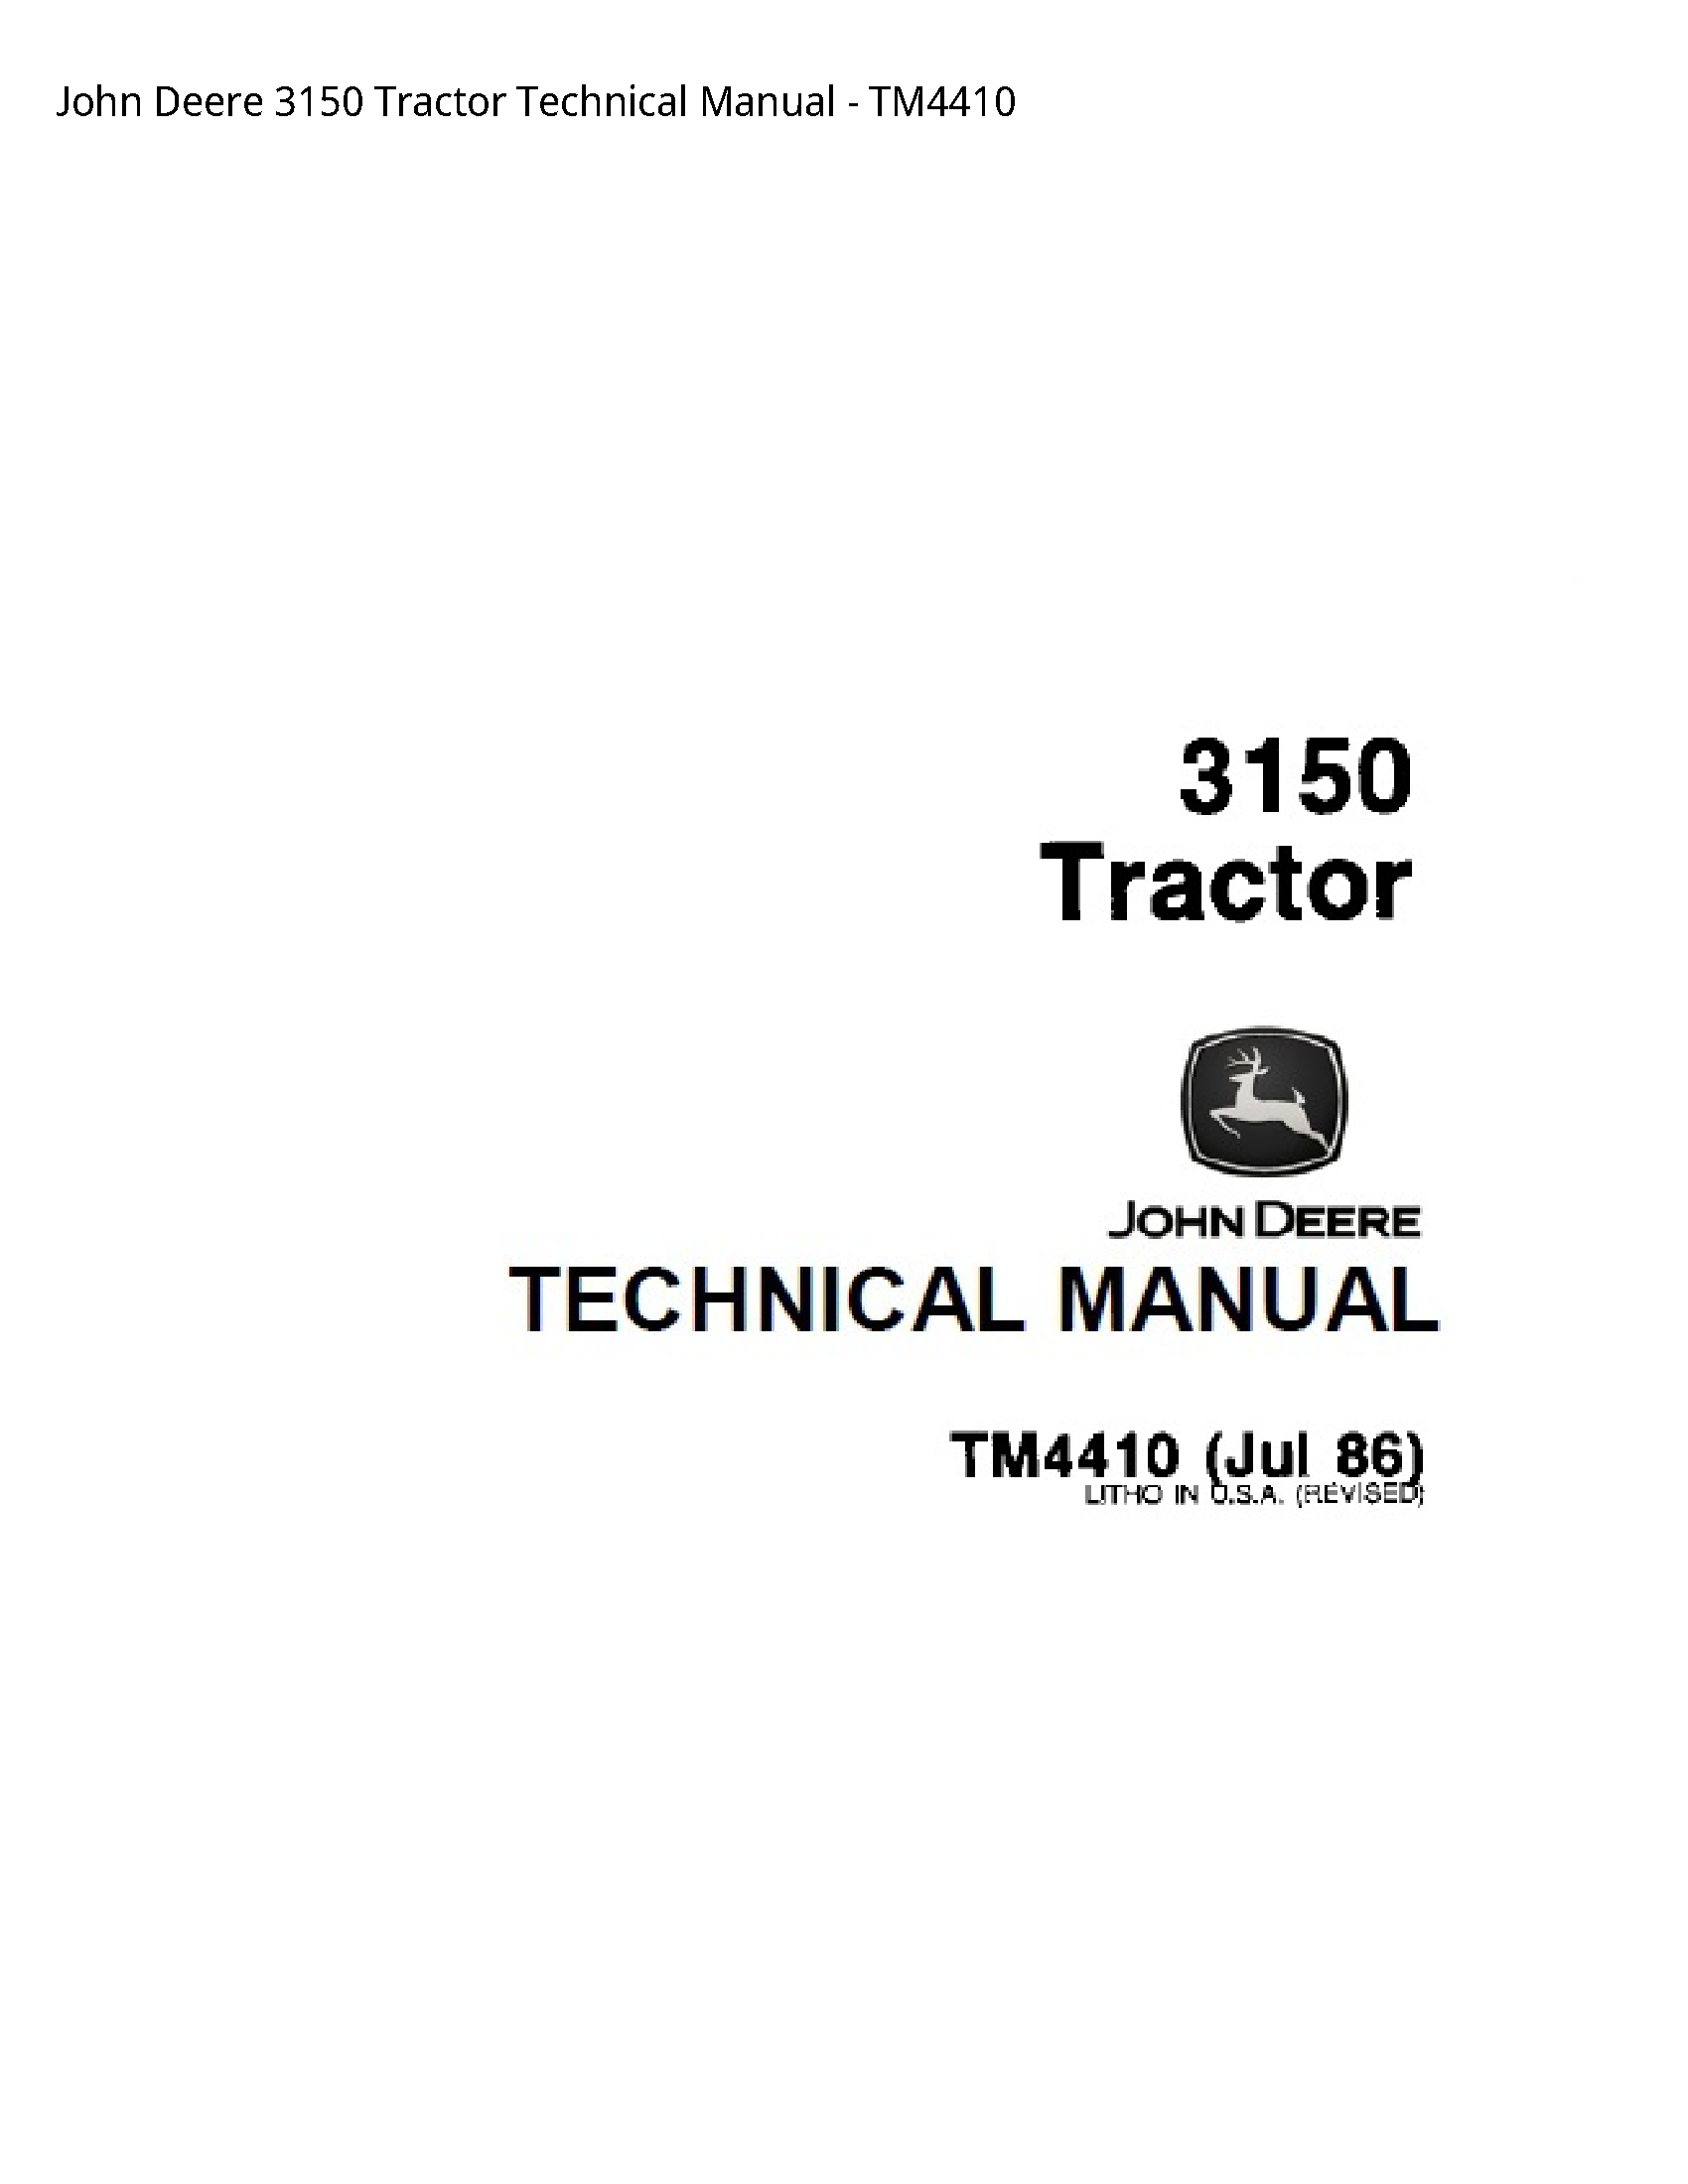 John Deere 3150 Tractor Technical manual